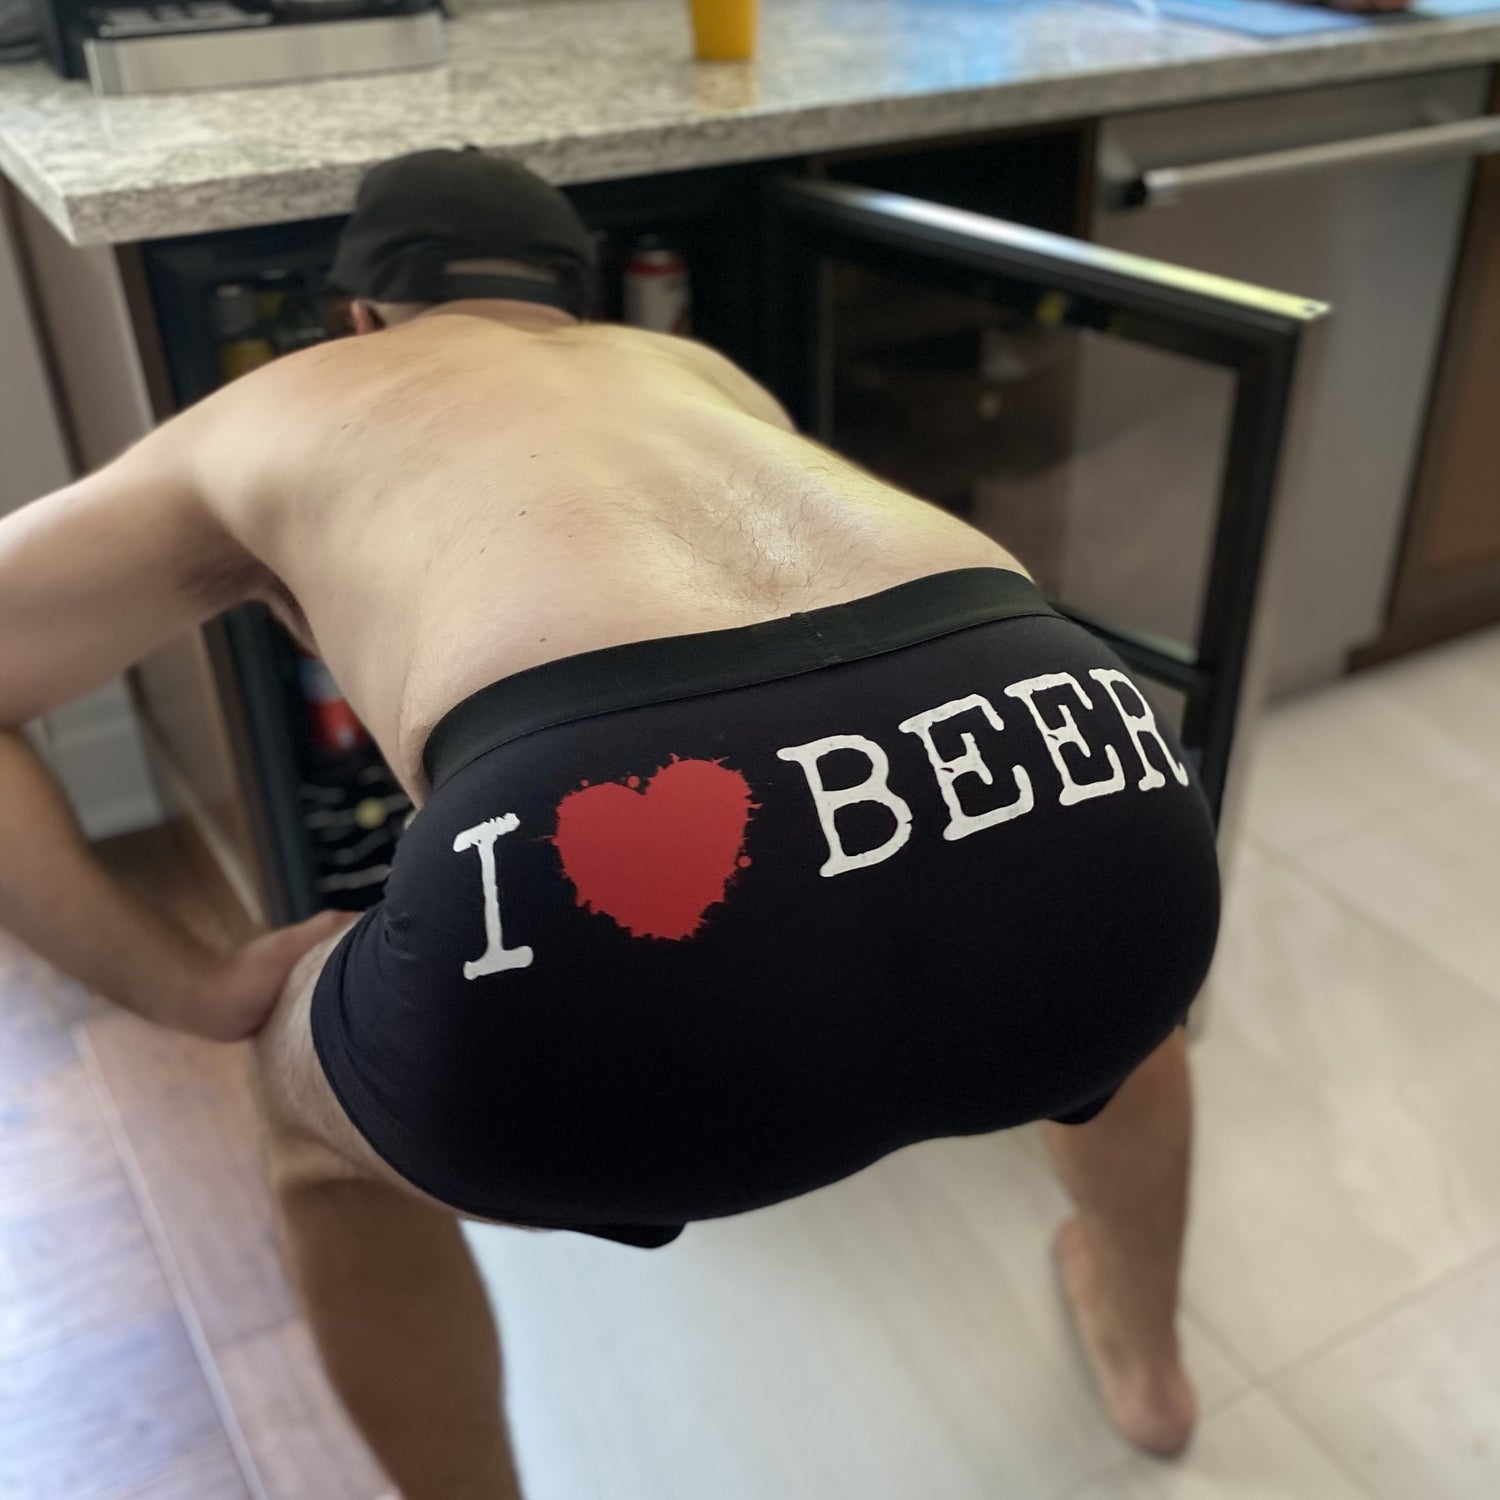 I Heart Beer | Boxer Briefs